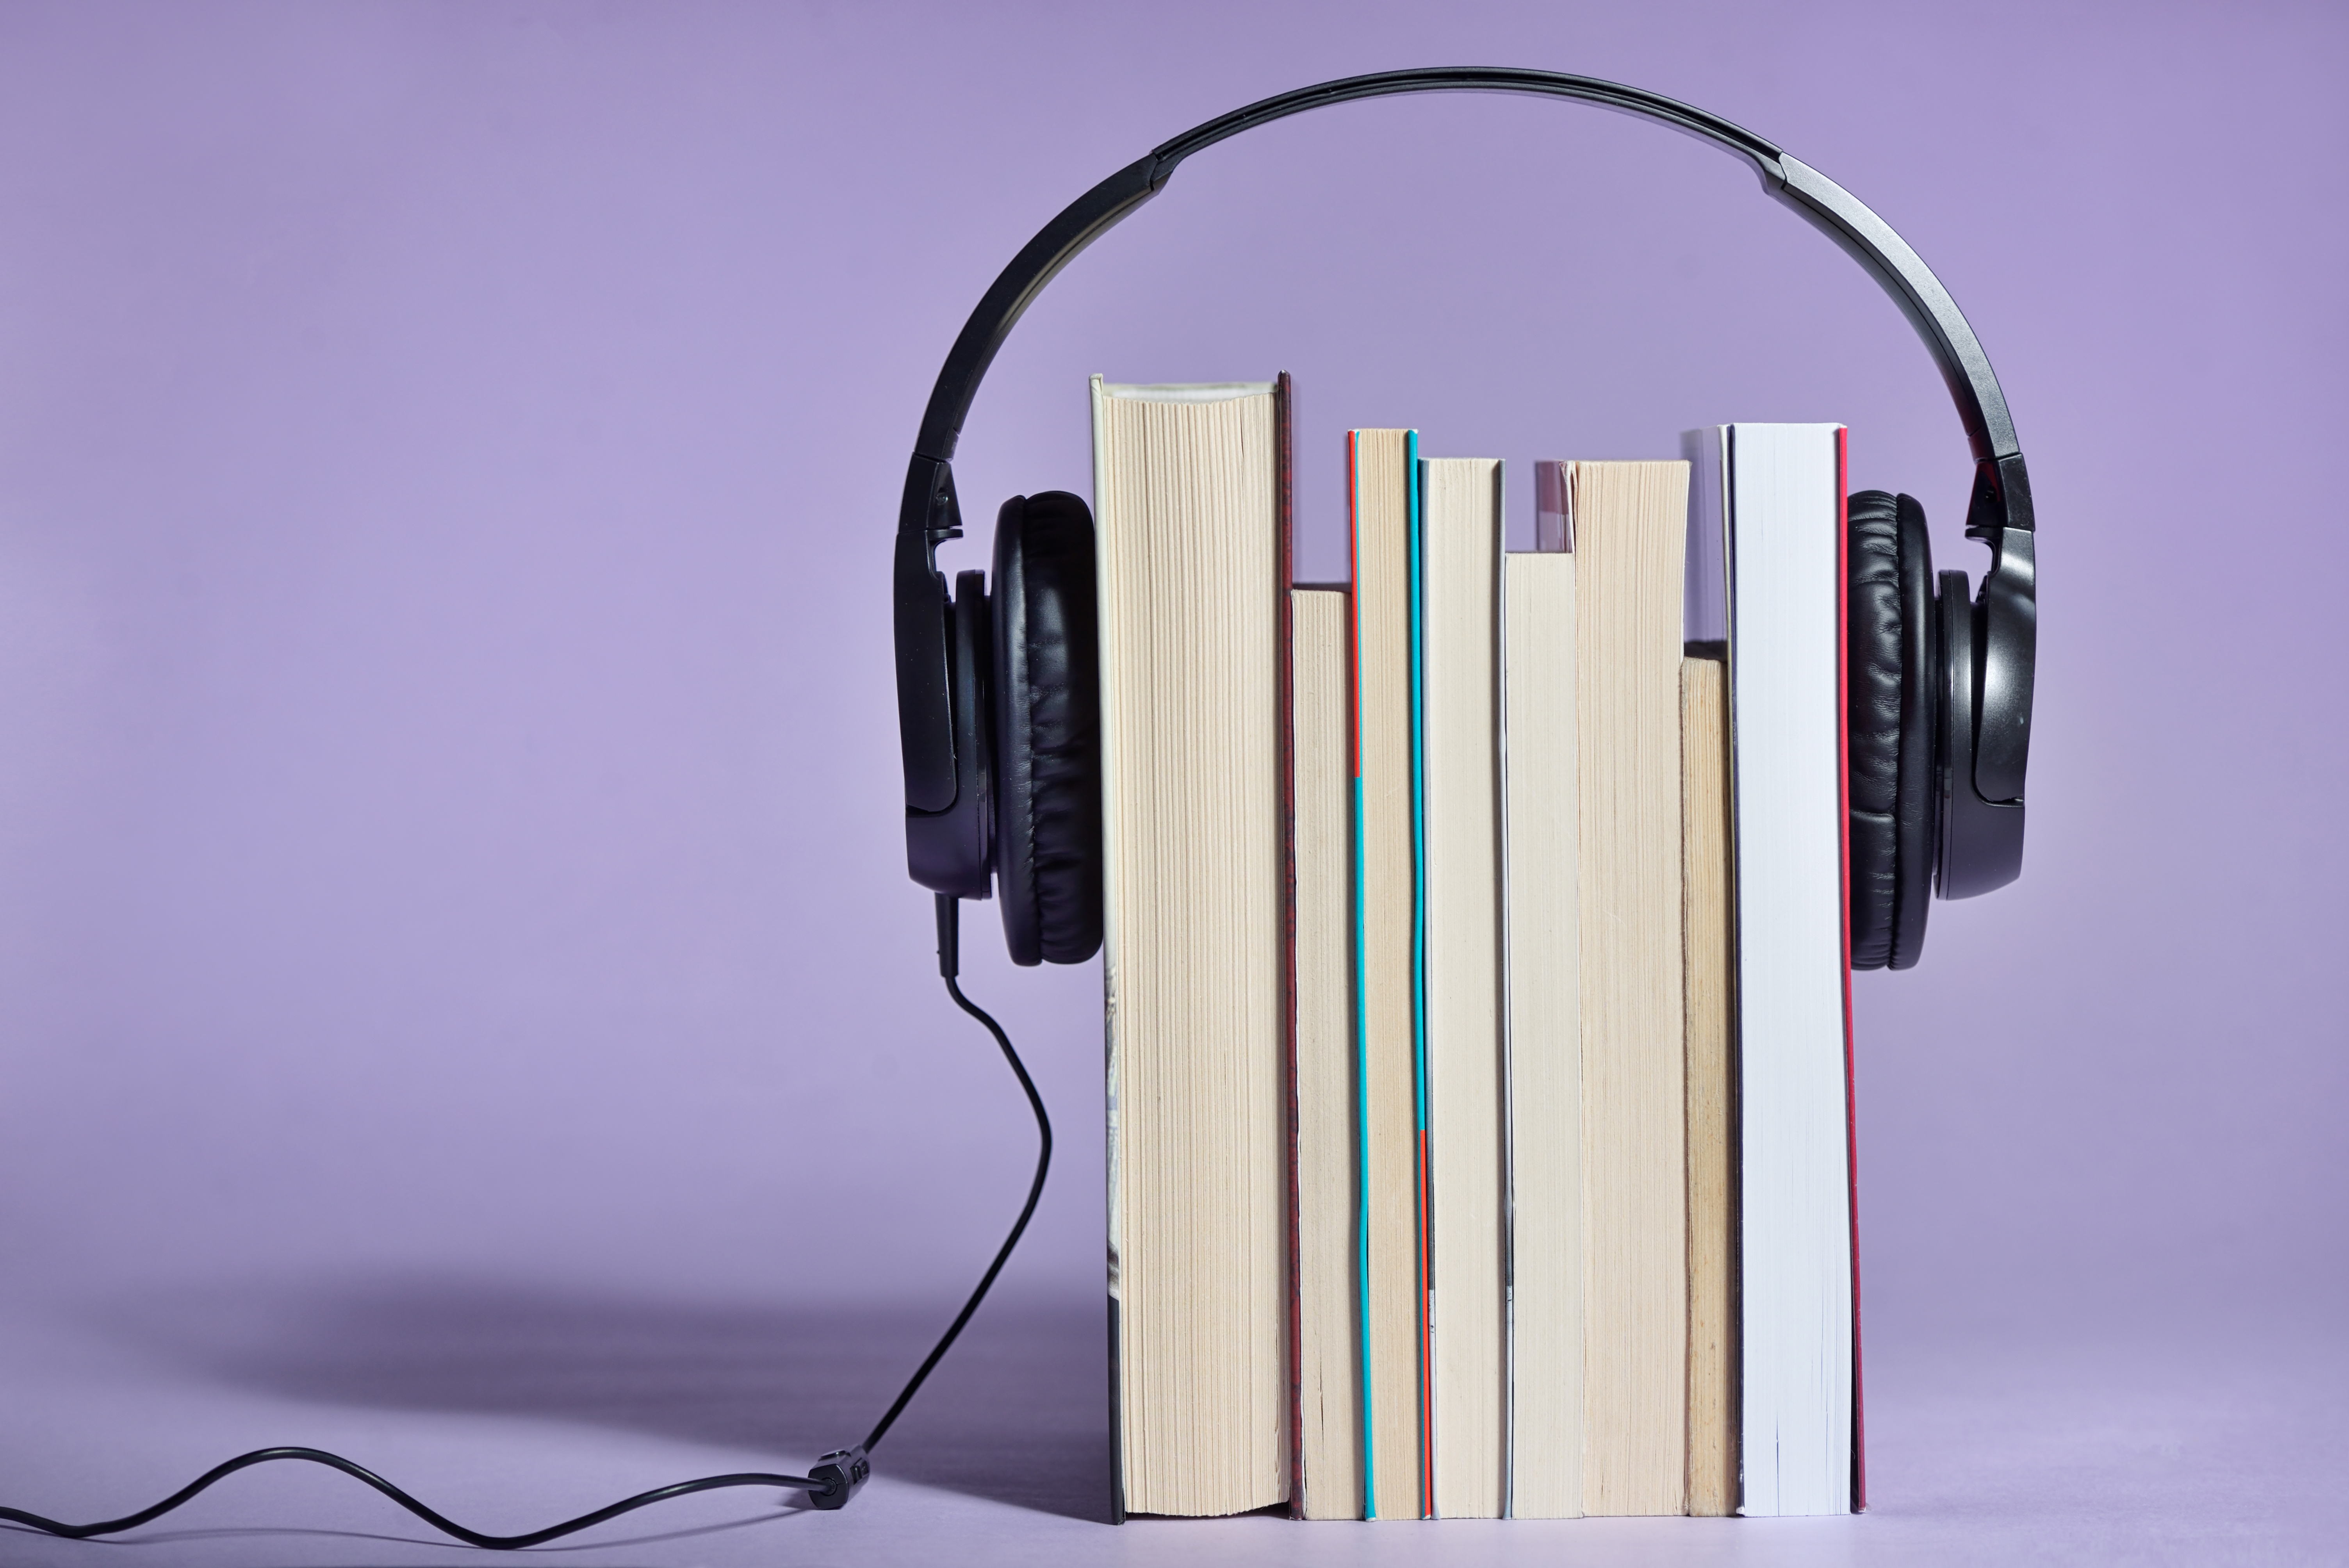 30362797-audio-books-with-books-and-headphones.jpg